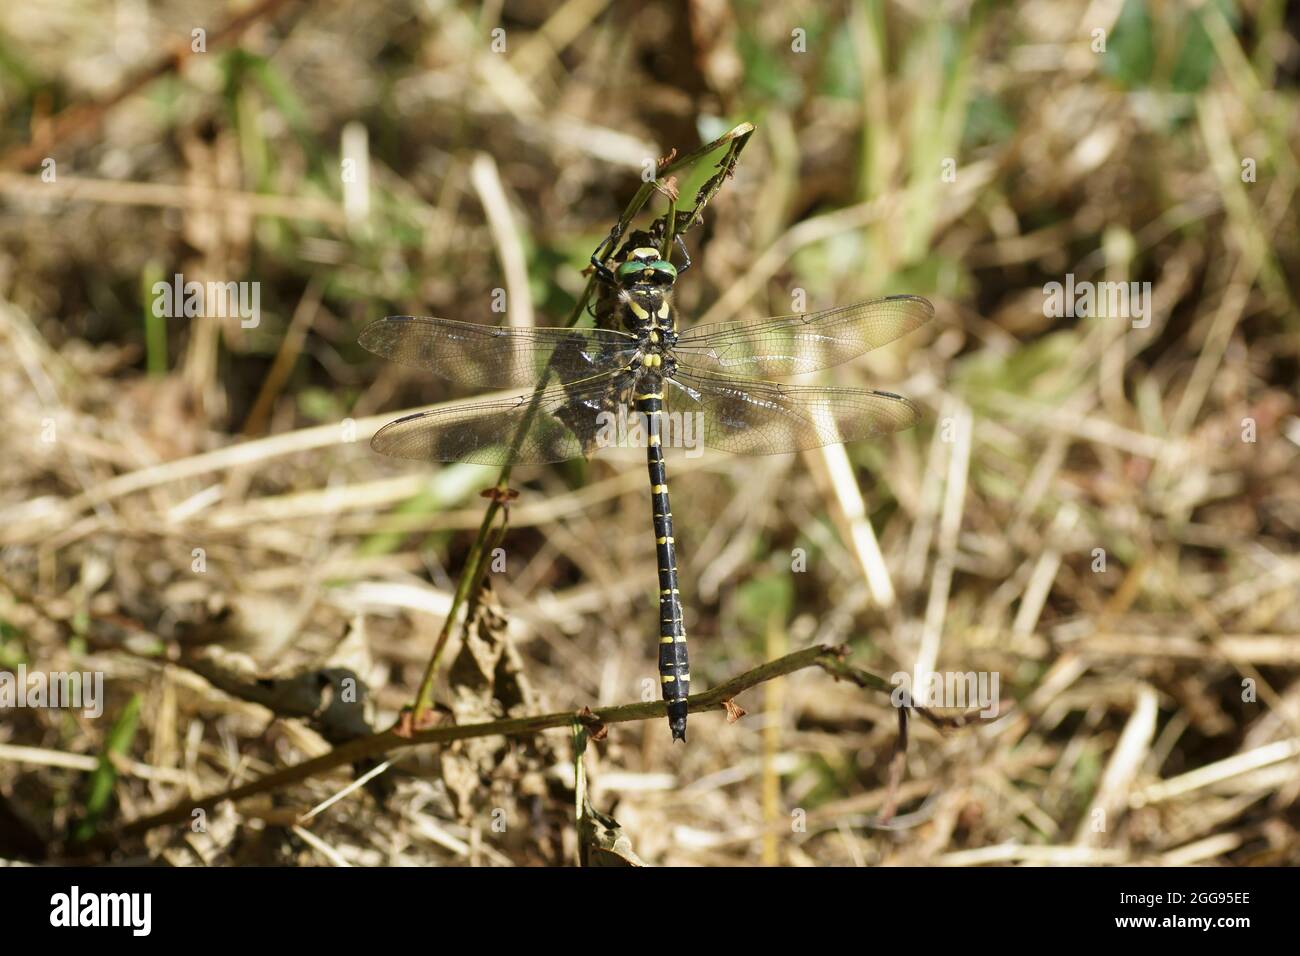 Golden-ringed dragonfly (Cordulegaster boltonii) Stock Photo